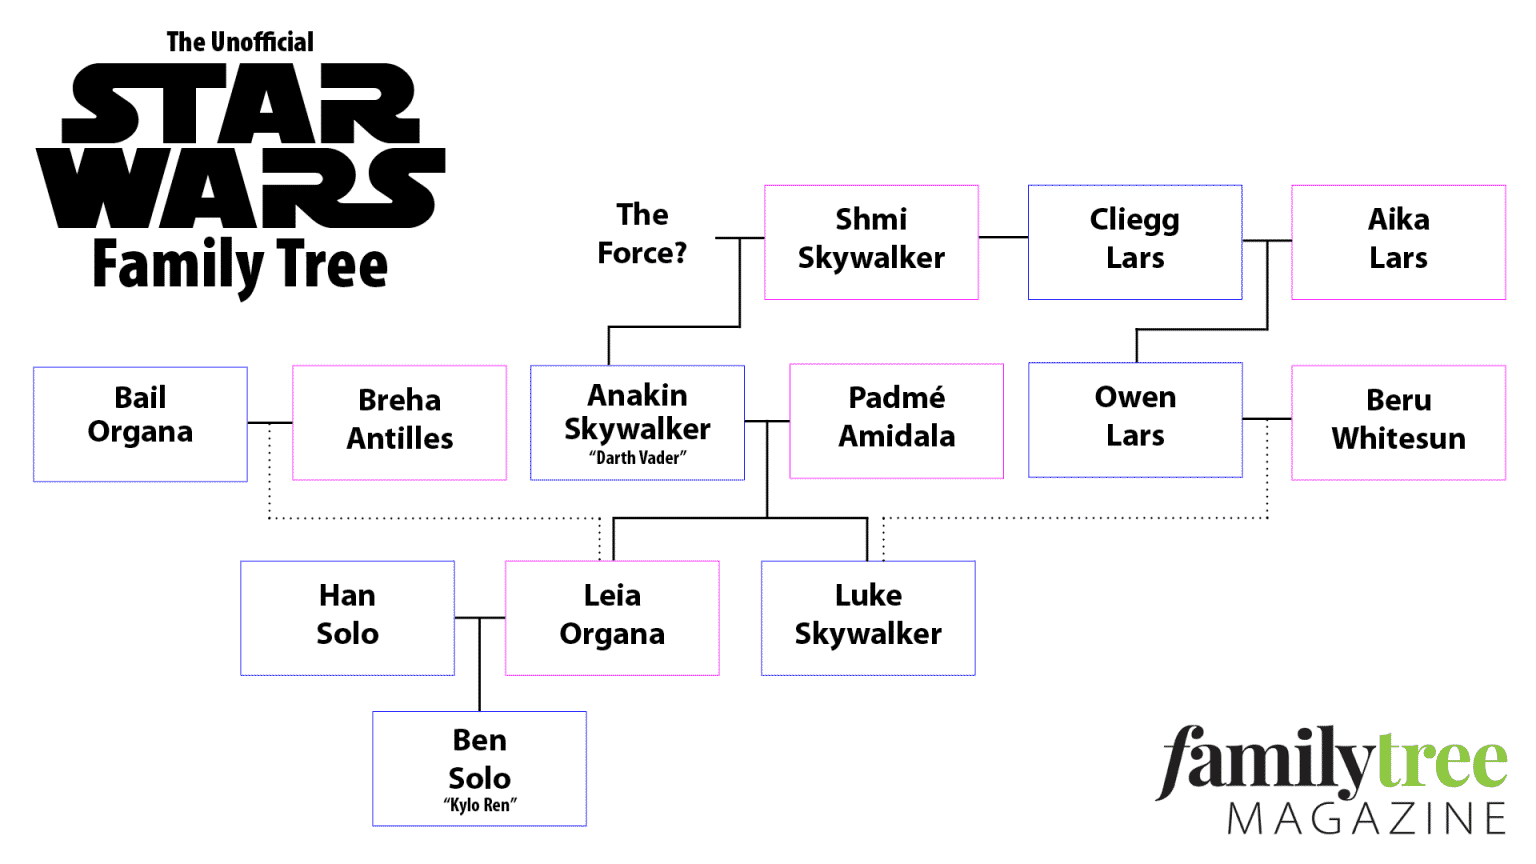 The Star Wars Family Tree